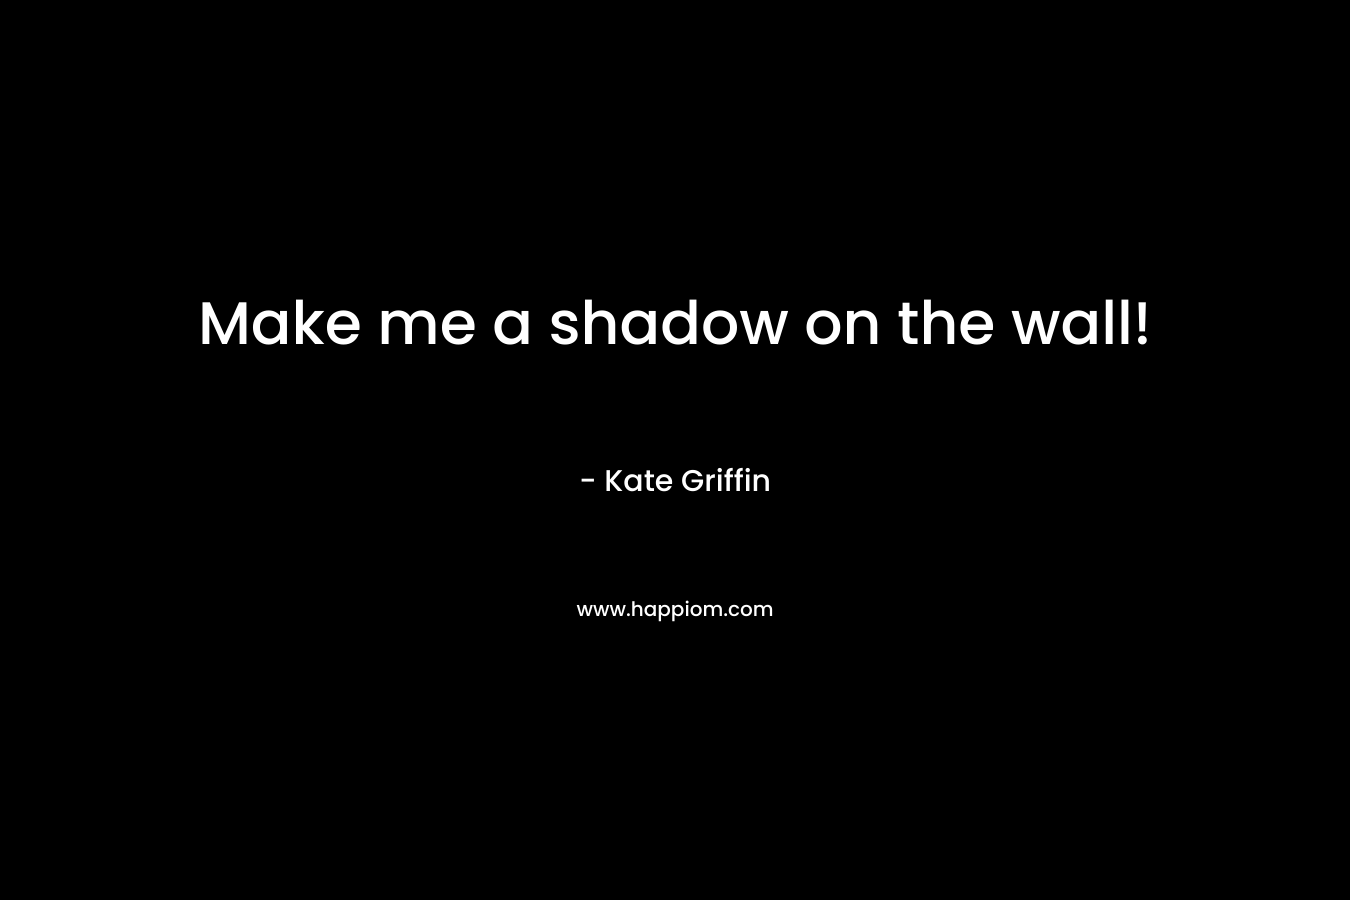 Make me a shadow on the wall!